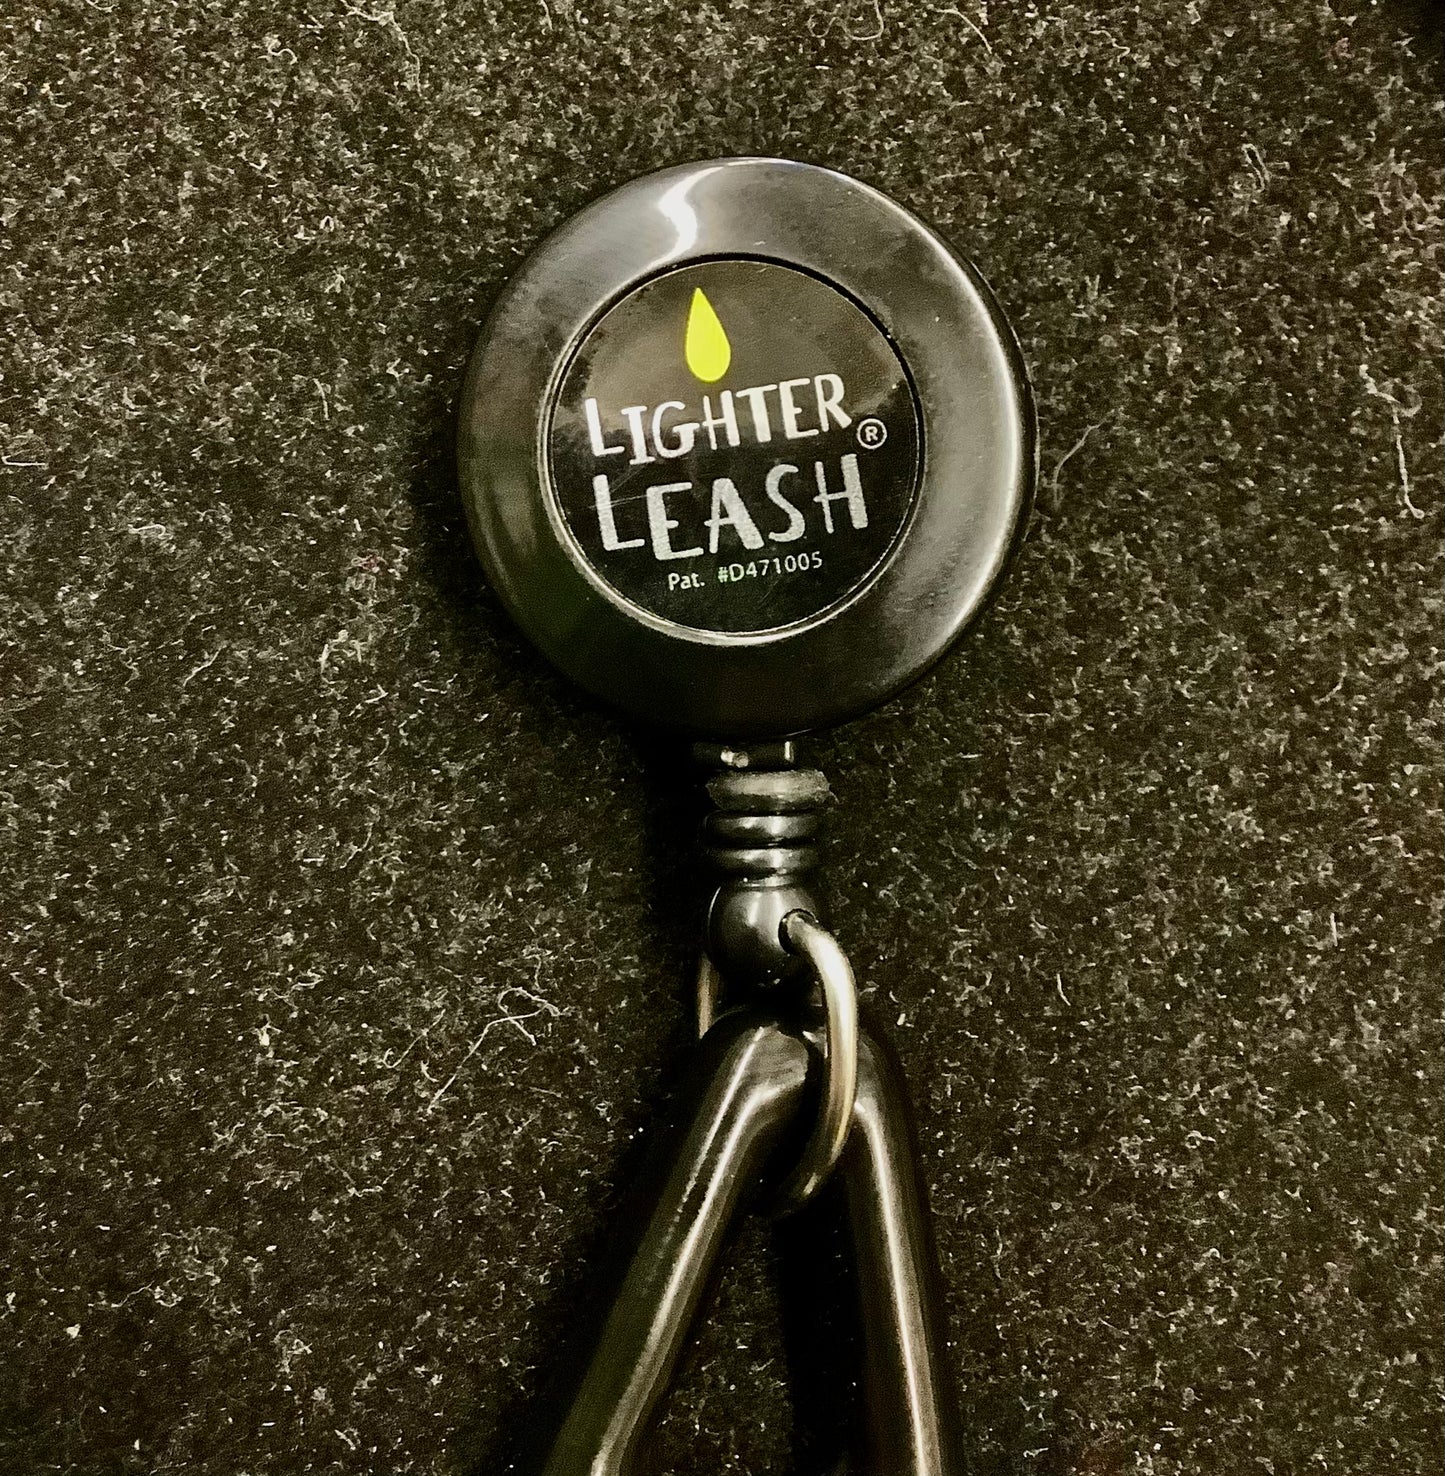 Lighter leash w/ clip